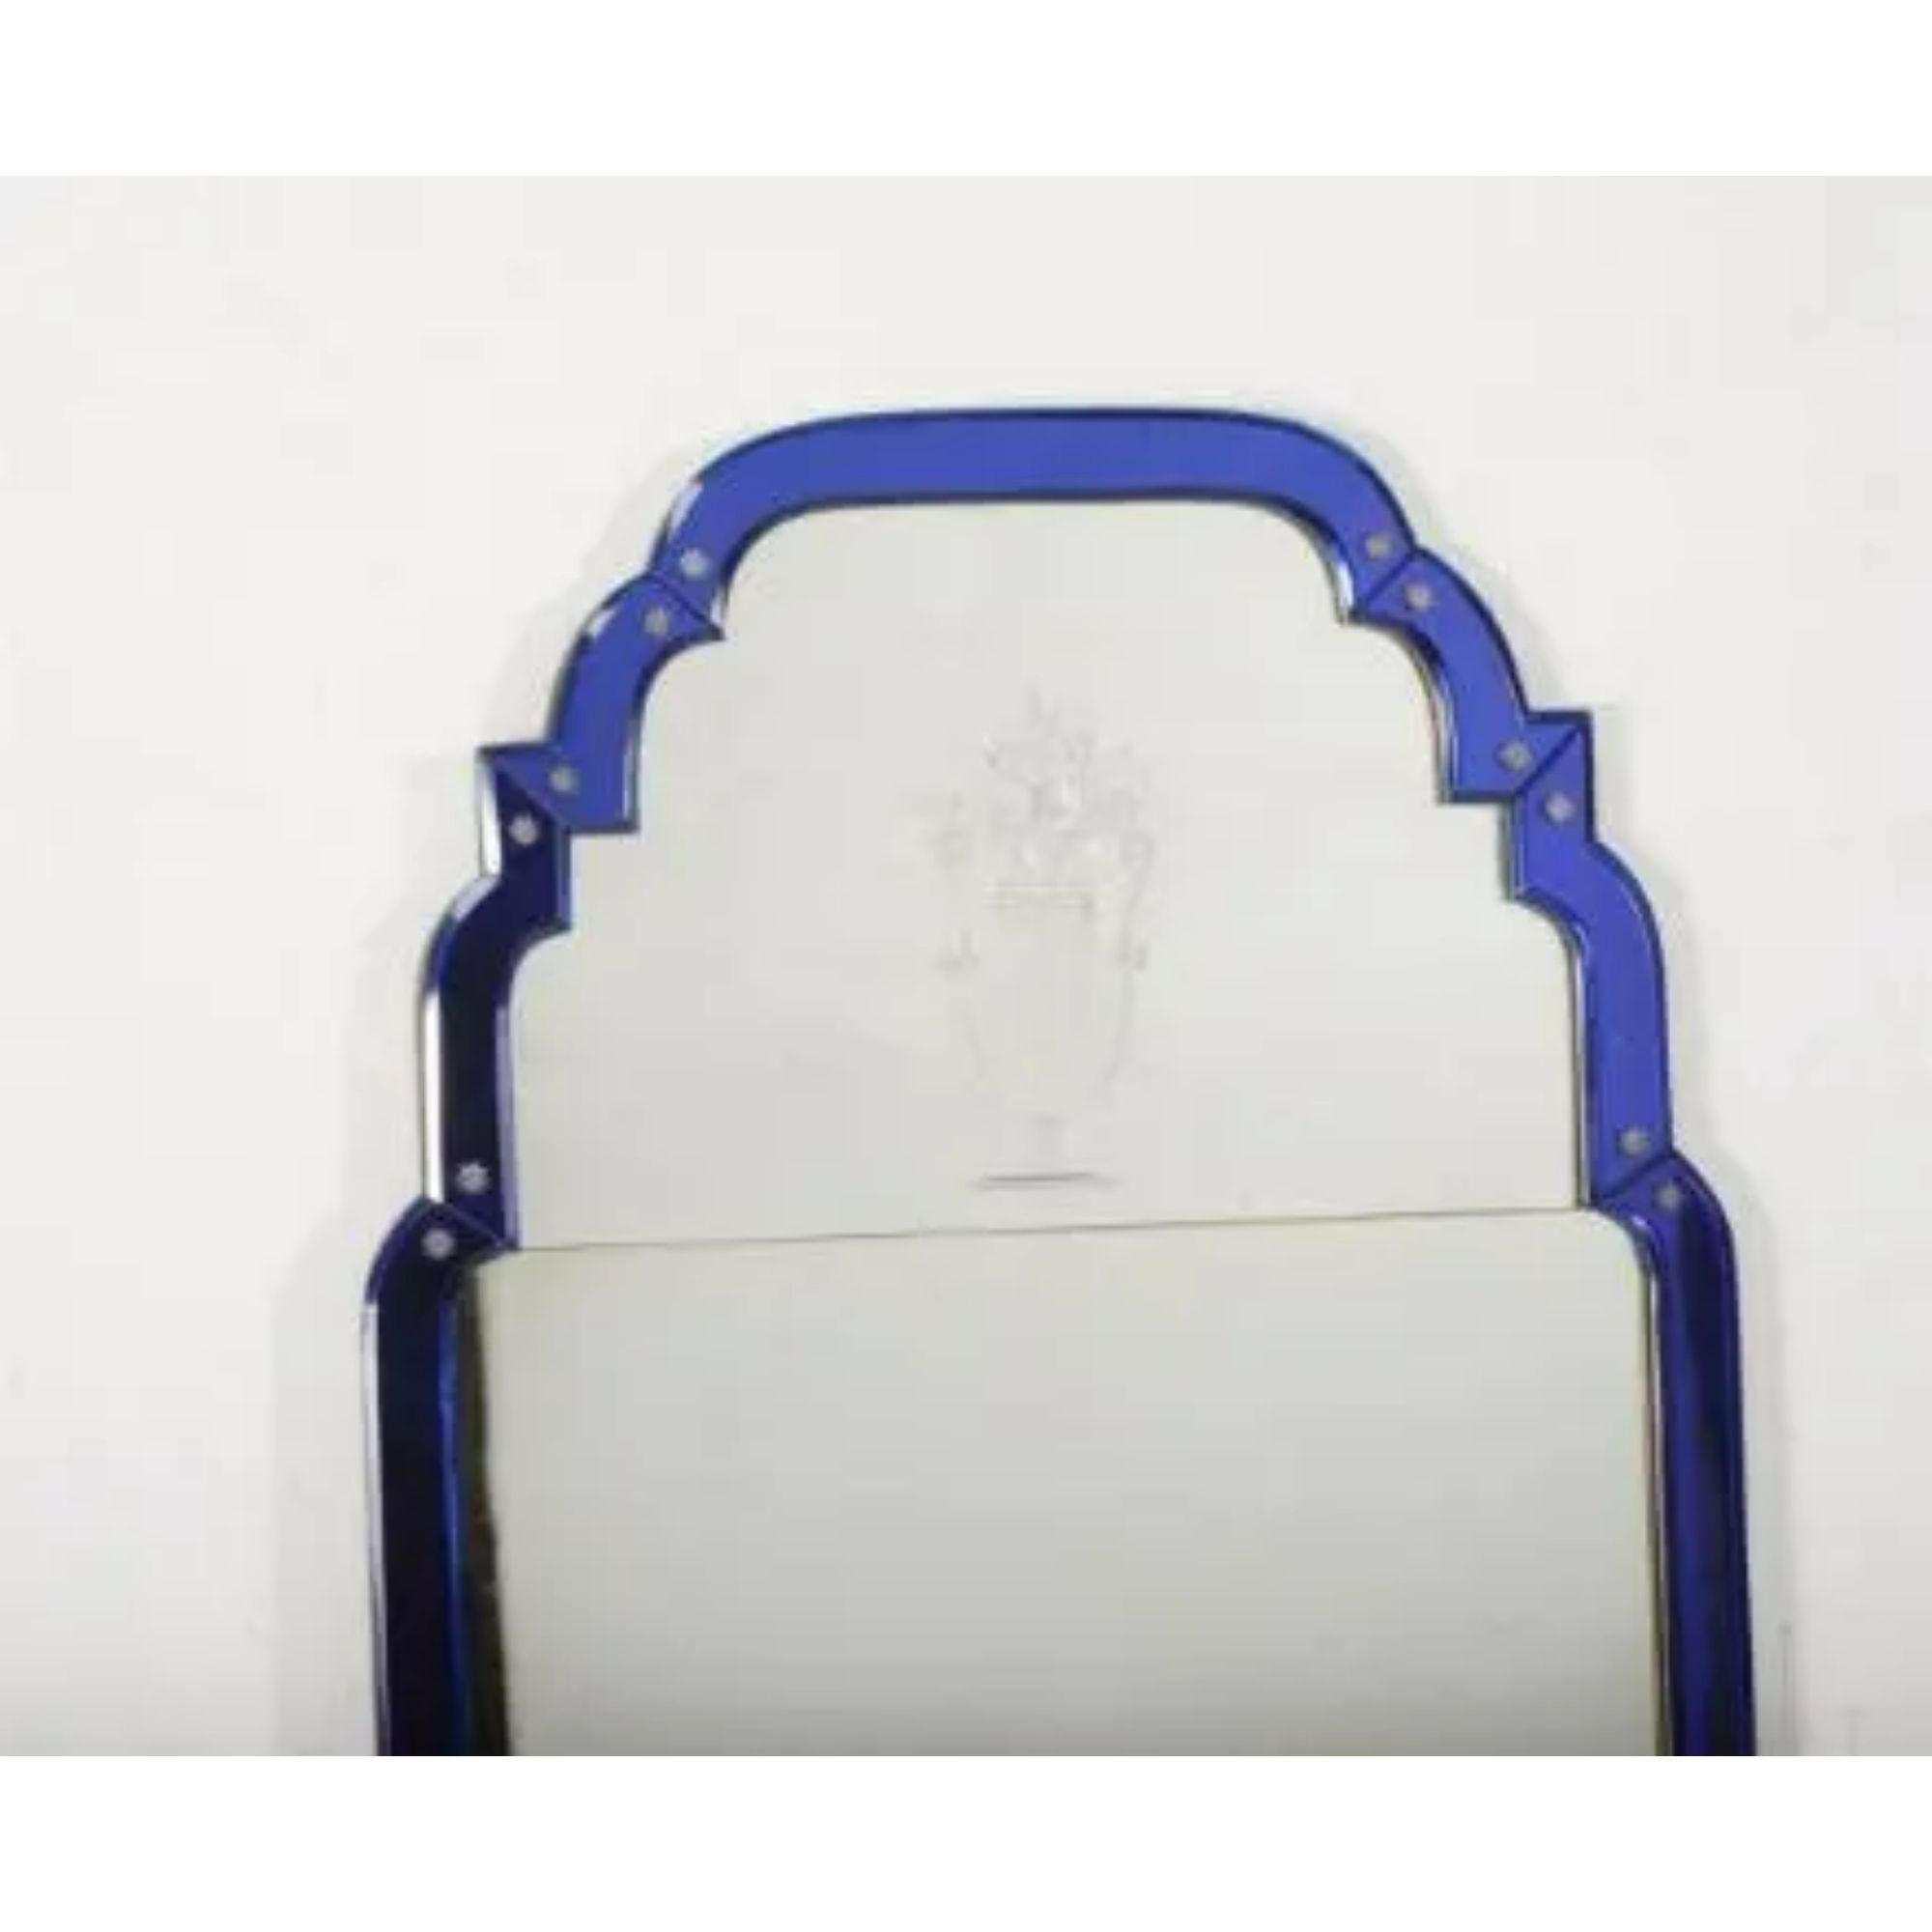 Blue glass framed Pier mirror

Dimensions: 101 x 57 cm.